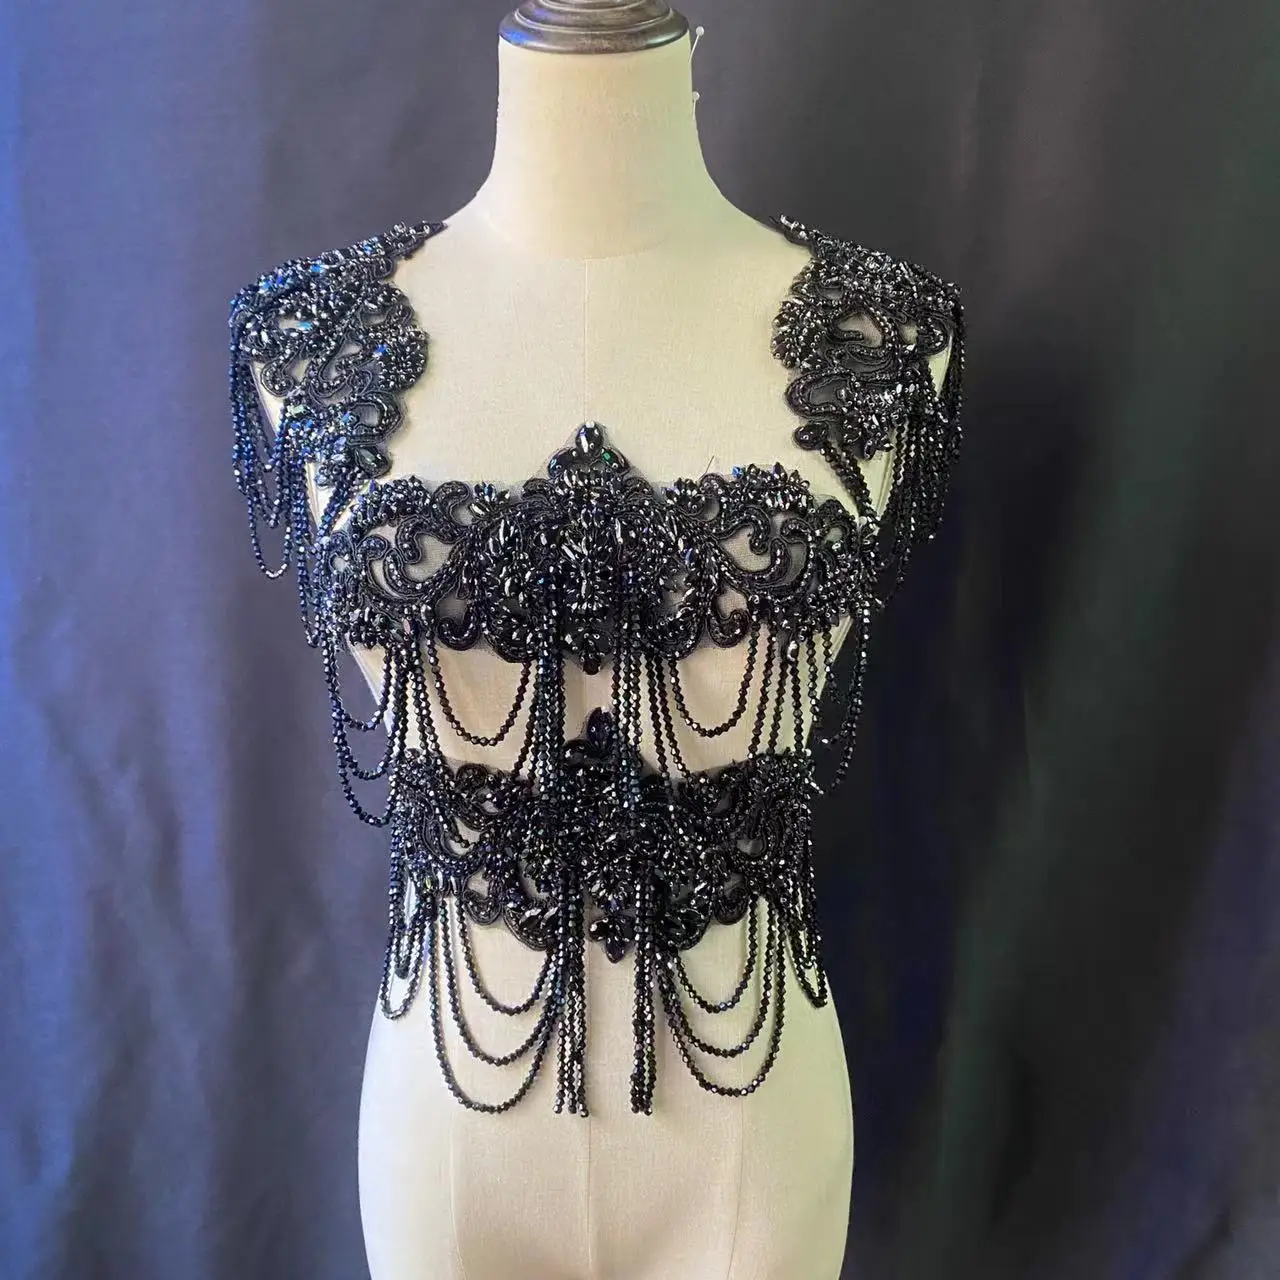 

Black Tassel Handcrafted Rhinestone Applique Fringe Bodice Patch for DIY Clothing,Shoulder Chains,Bridal Neckline Sash